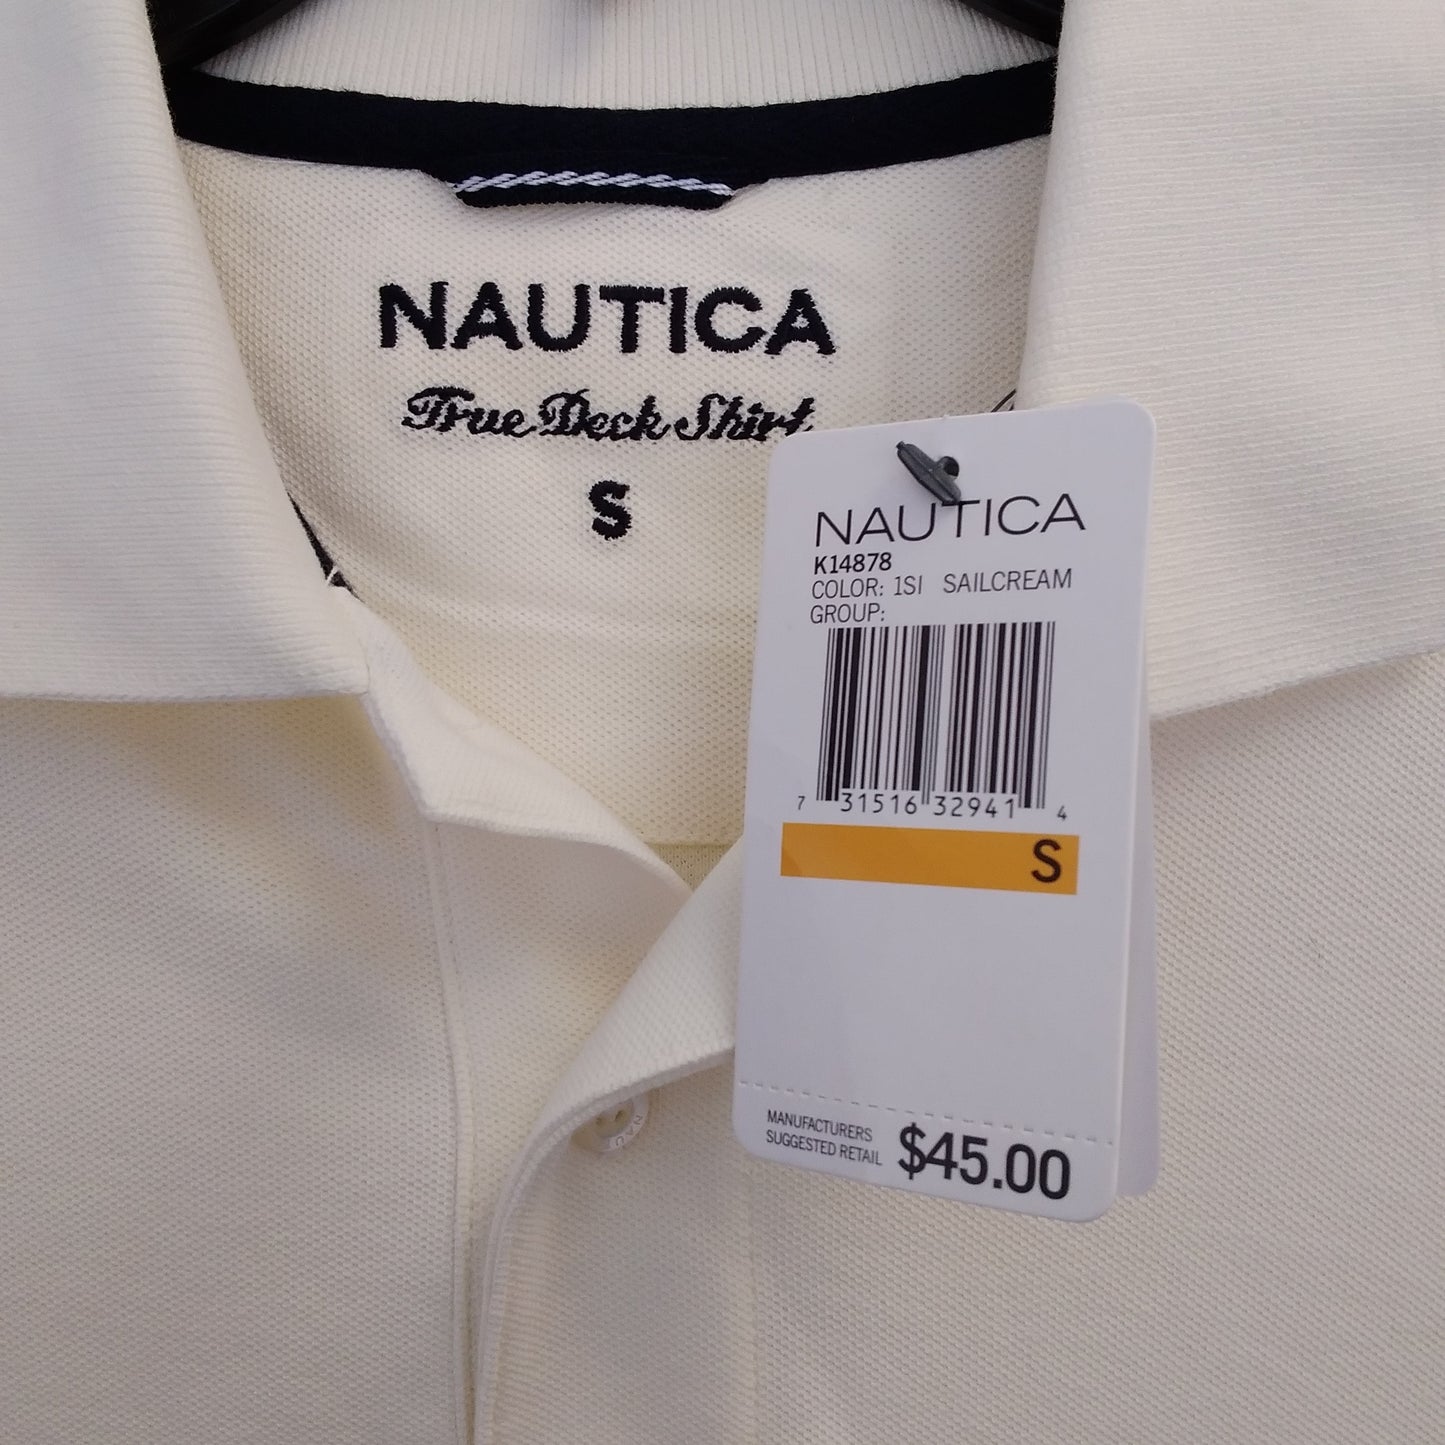 NWT - Nautica yellow Slim Fit Sailcream True Deck Shirt - S